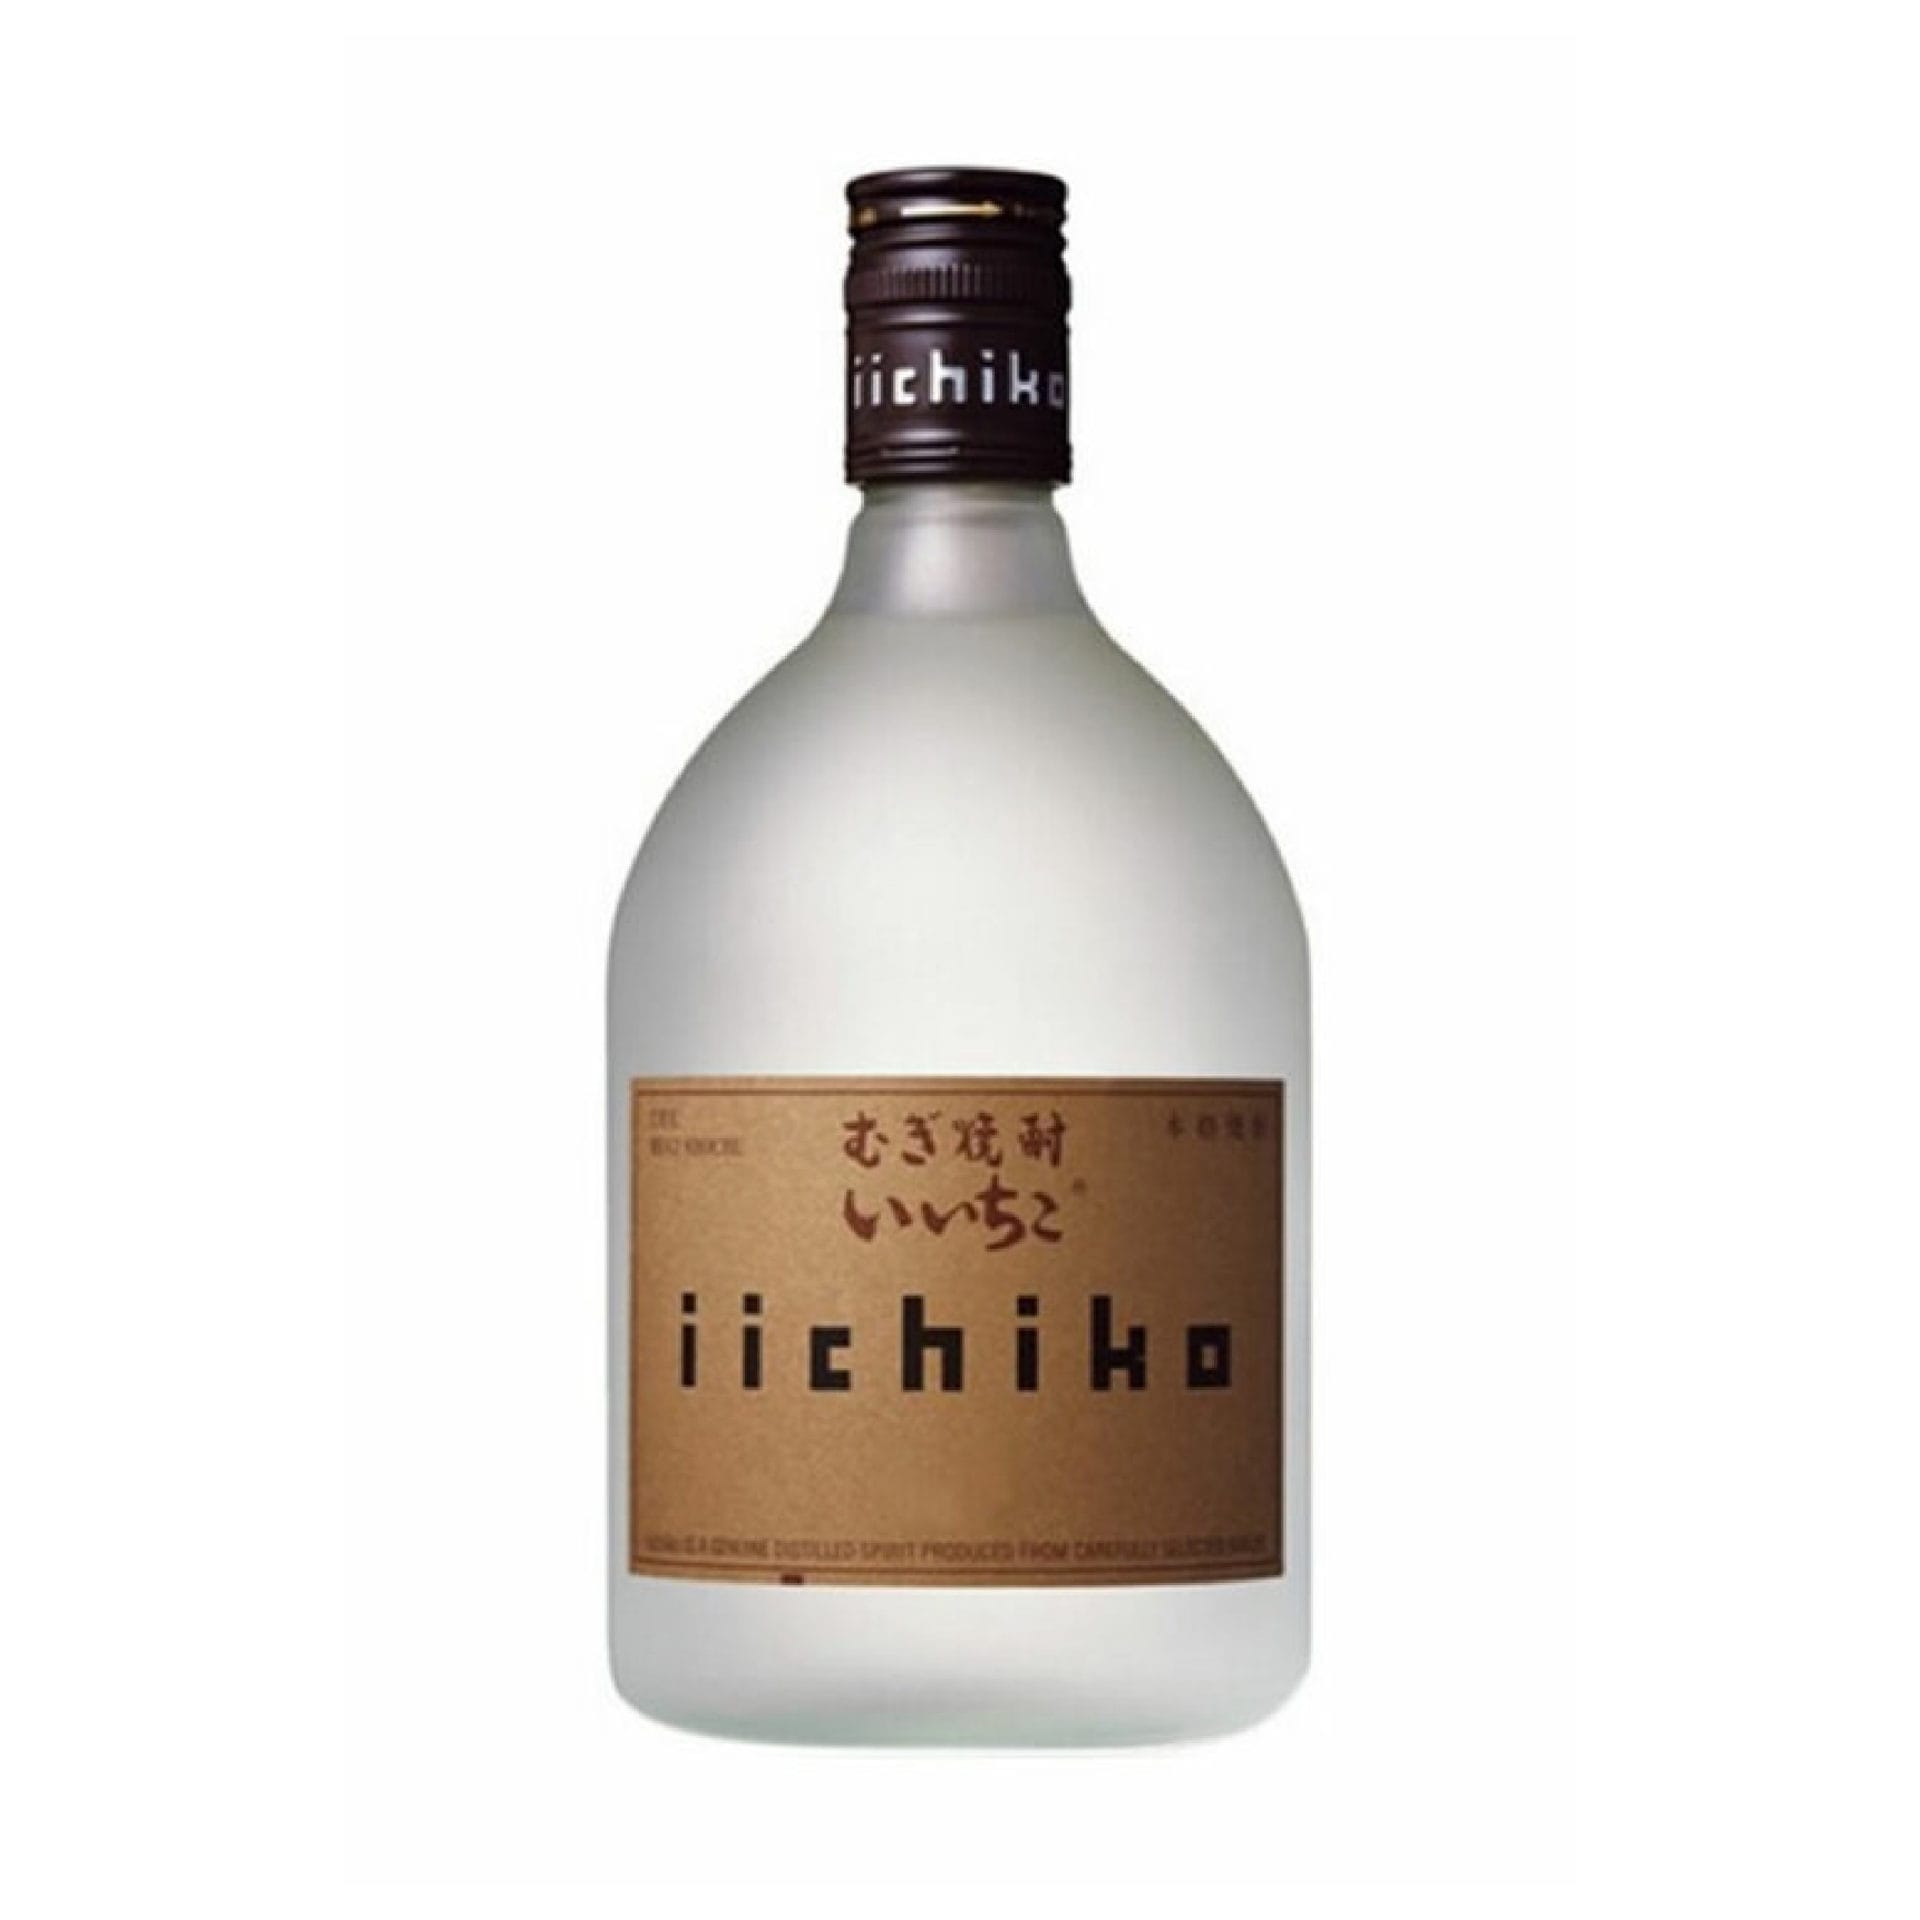 Iichiko Silhouette White 720ml - S Liquor